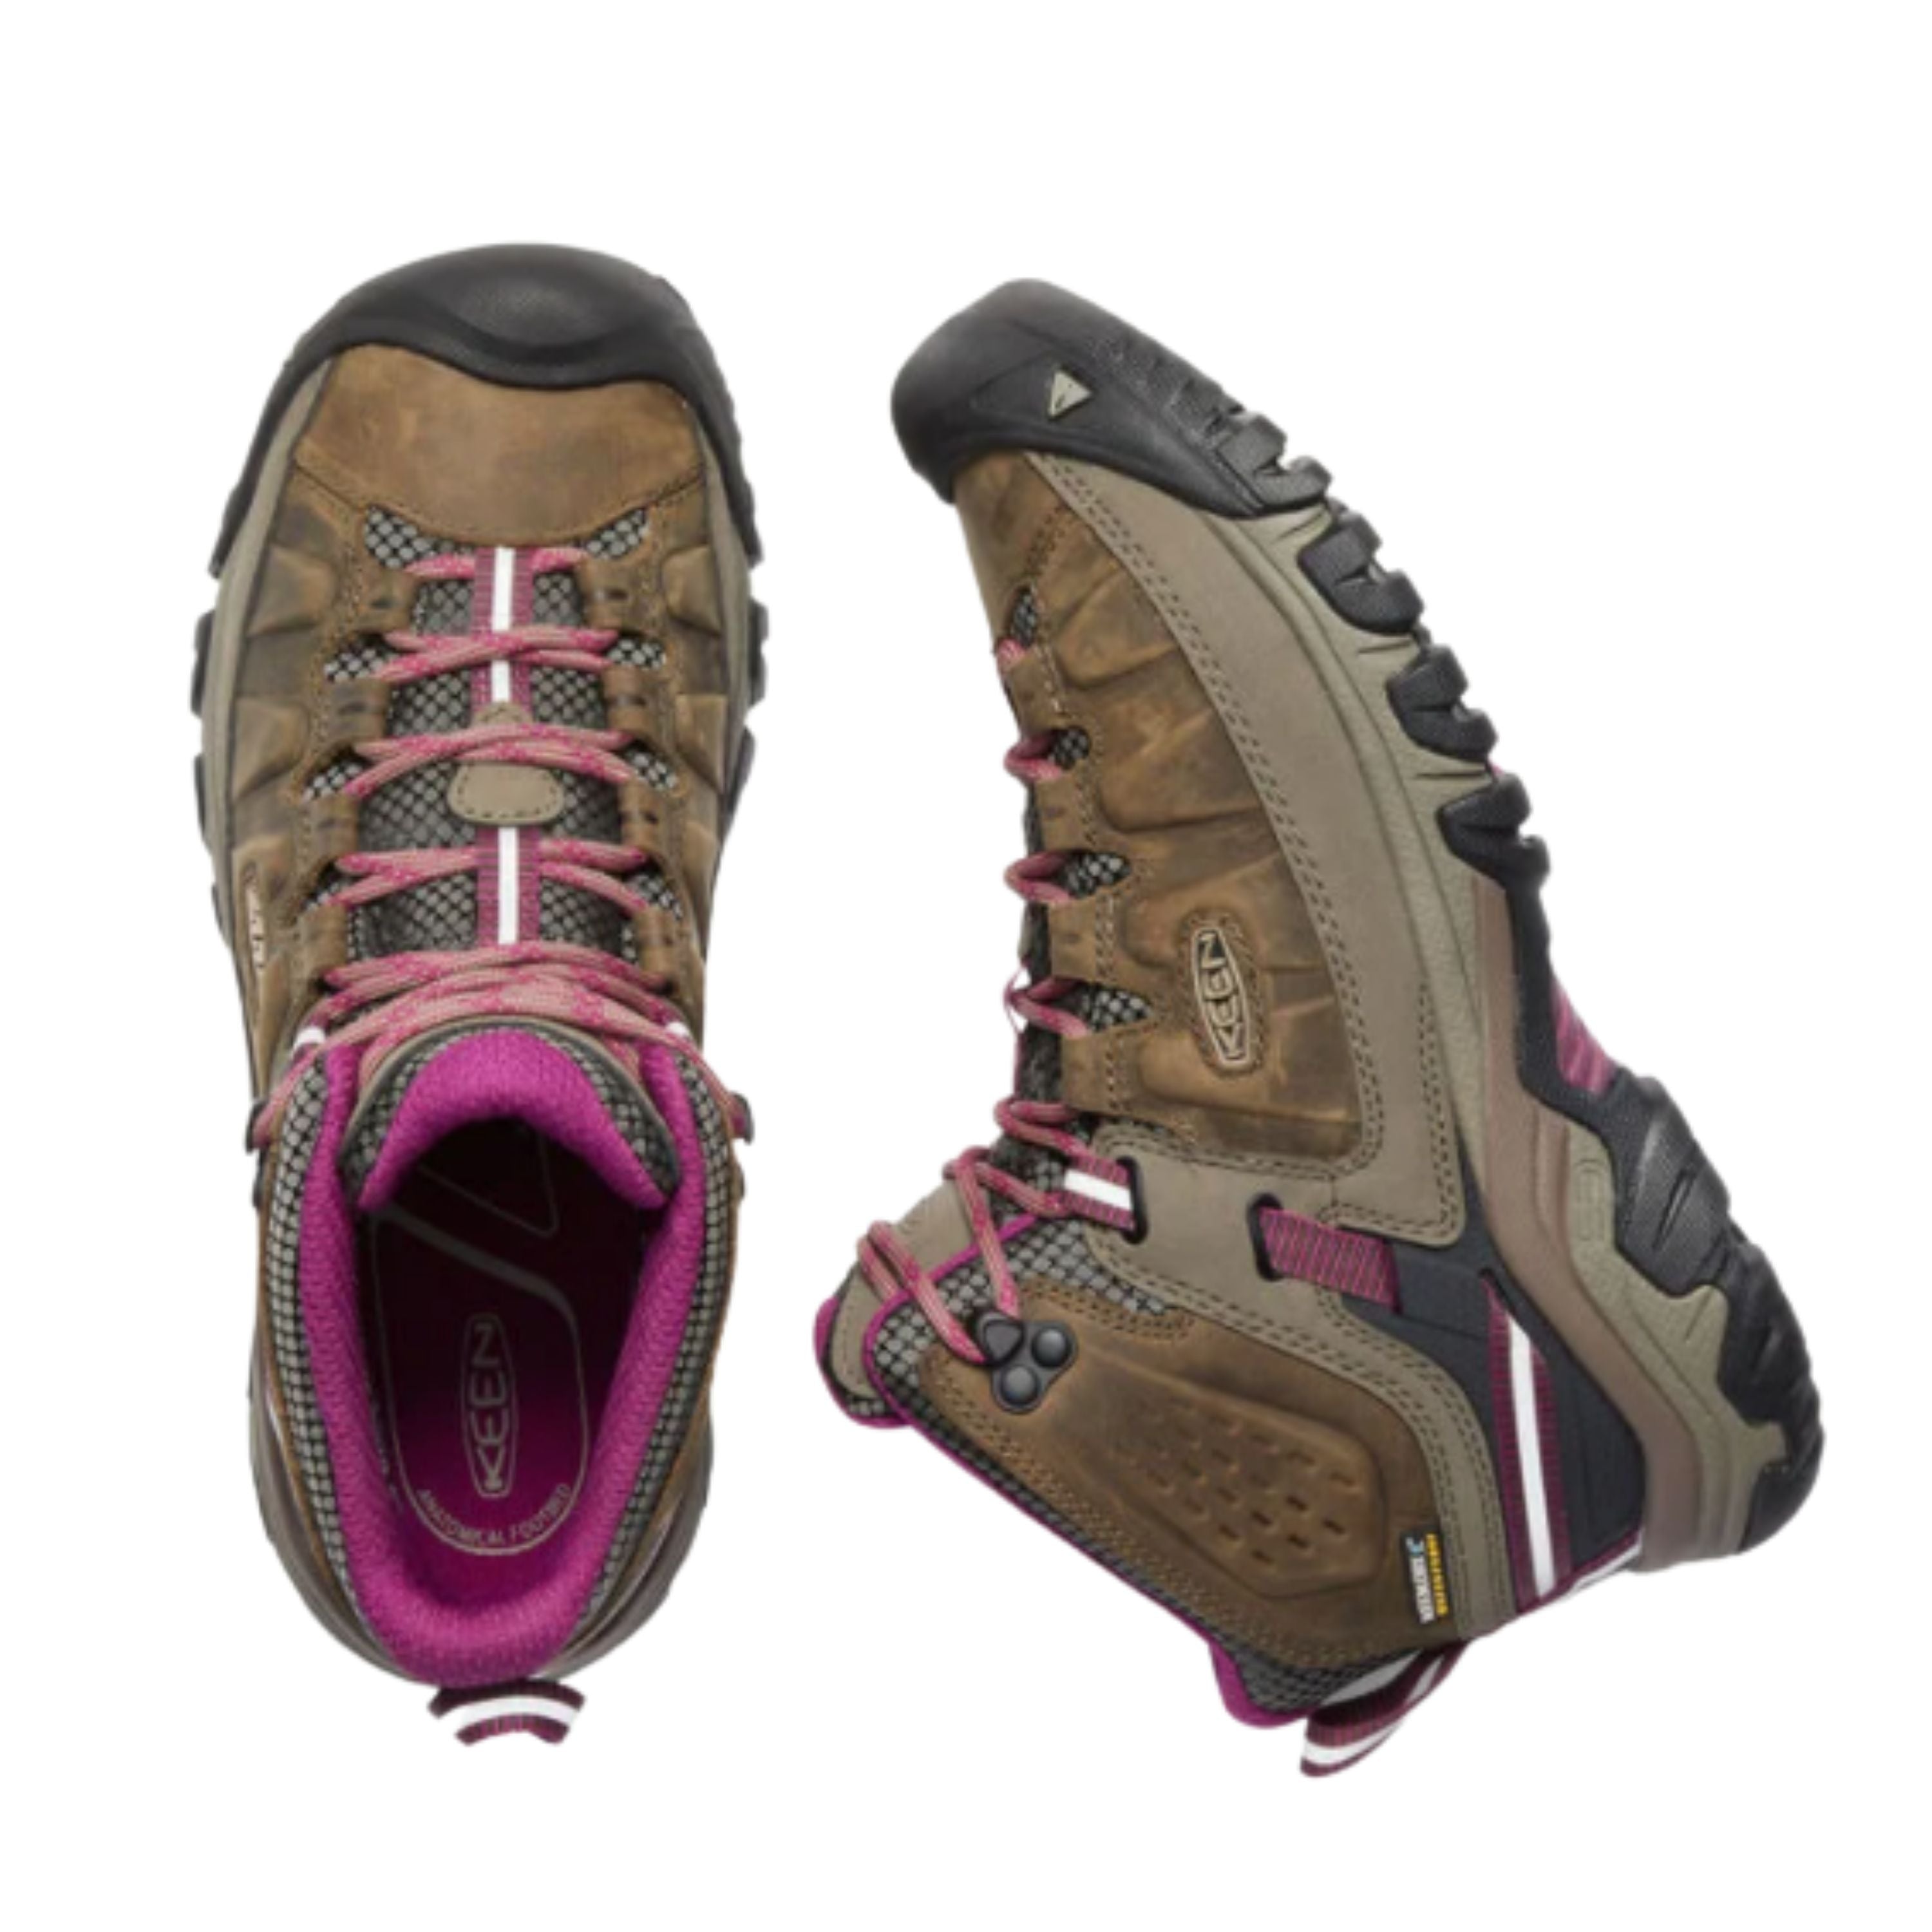 "Targhee III Mid WP" hiking boots - Women's